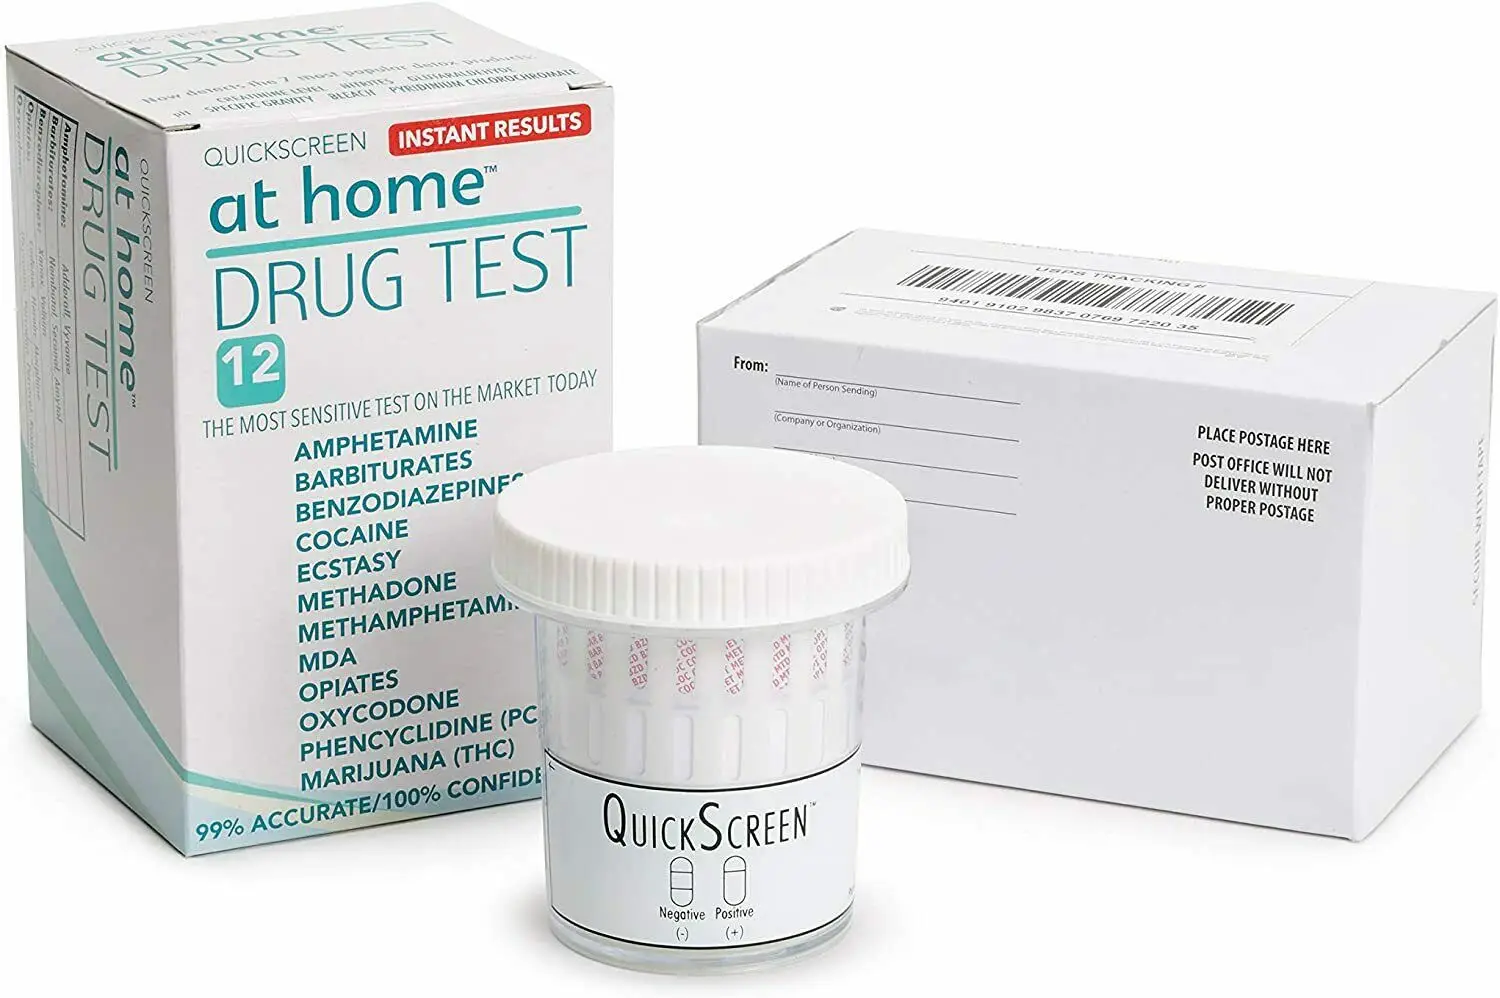 At Home Drug Test | At Home Quickscreen Drug Test for 12 Types of Drugs, 1 Test